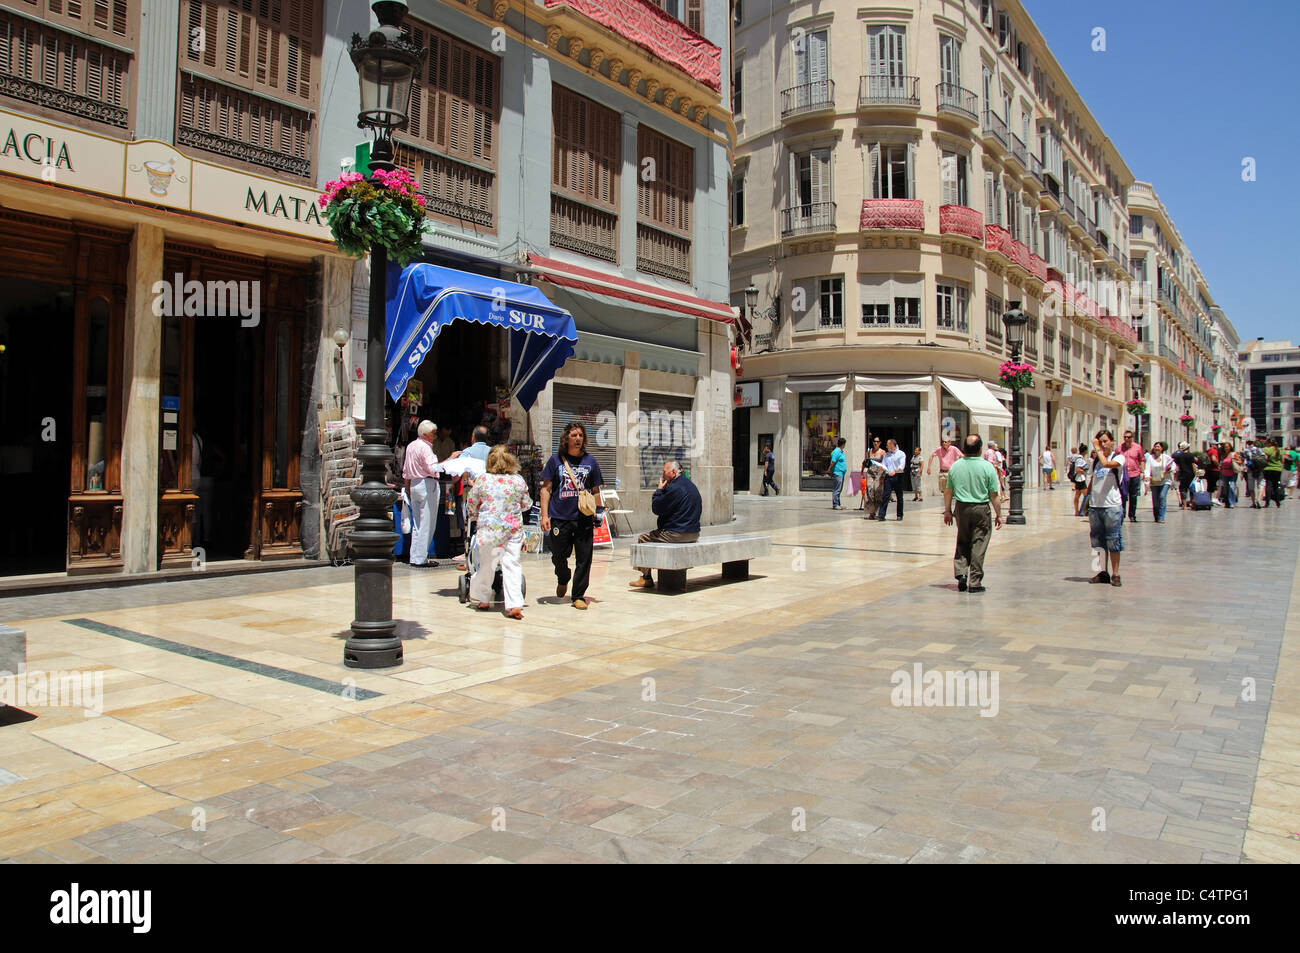 Calle Larios (rue commerçante), Malaga, Costa del Sol, la province de Malaga, Andalousie, Espagne, Europe de l'Ouest. Banque D'Images